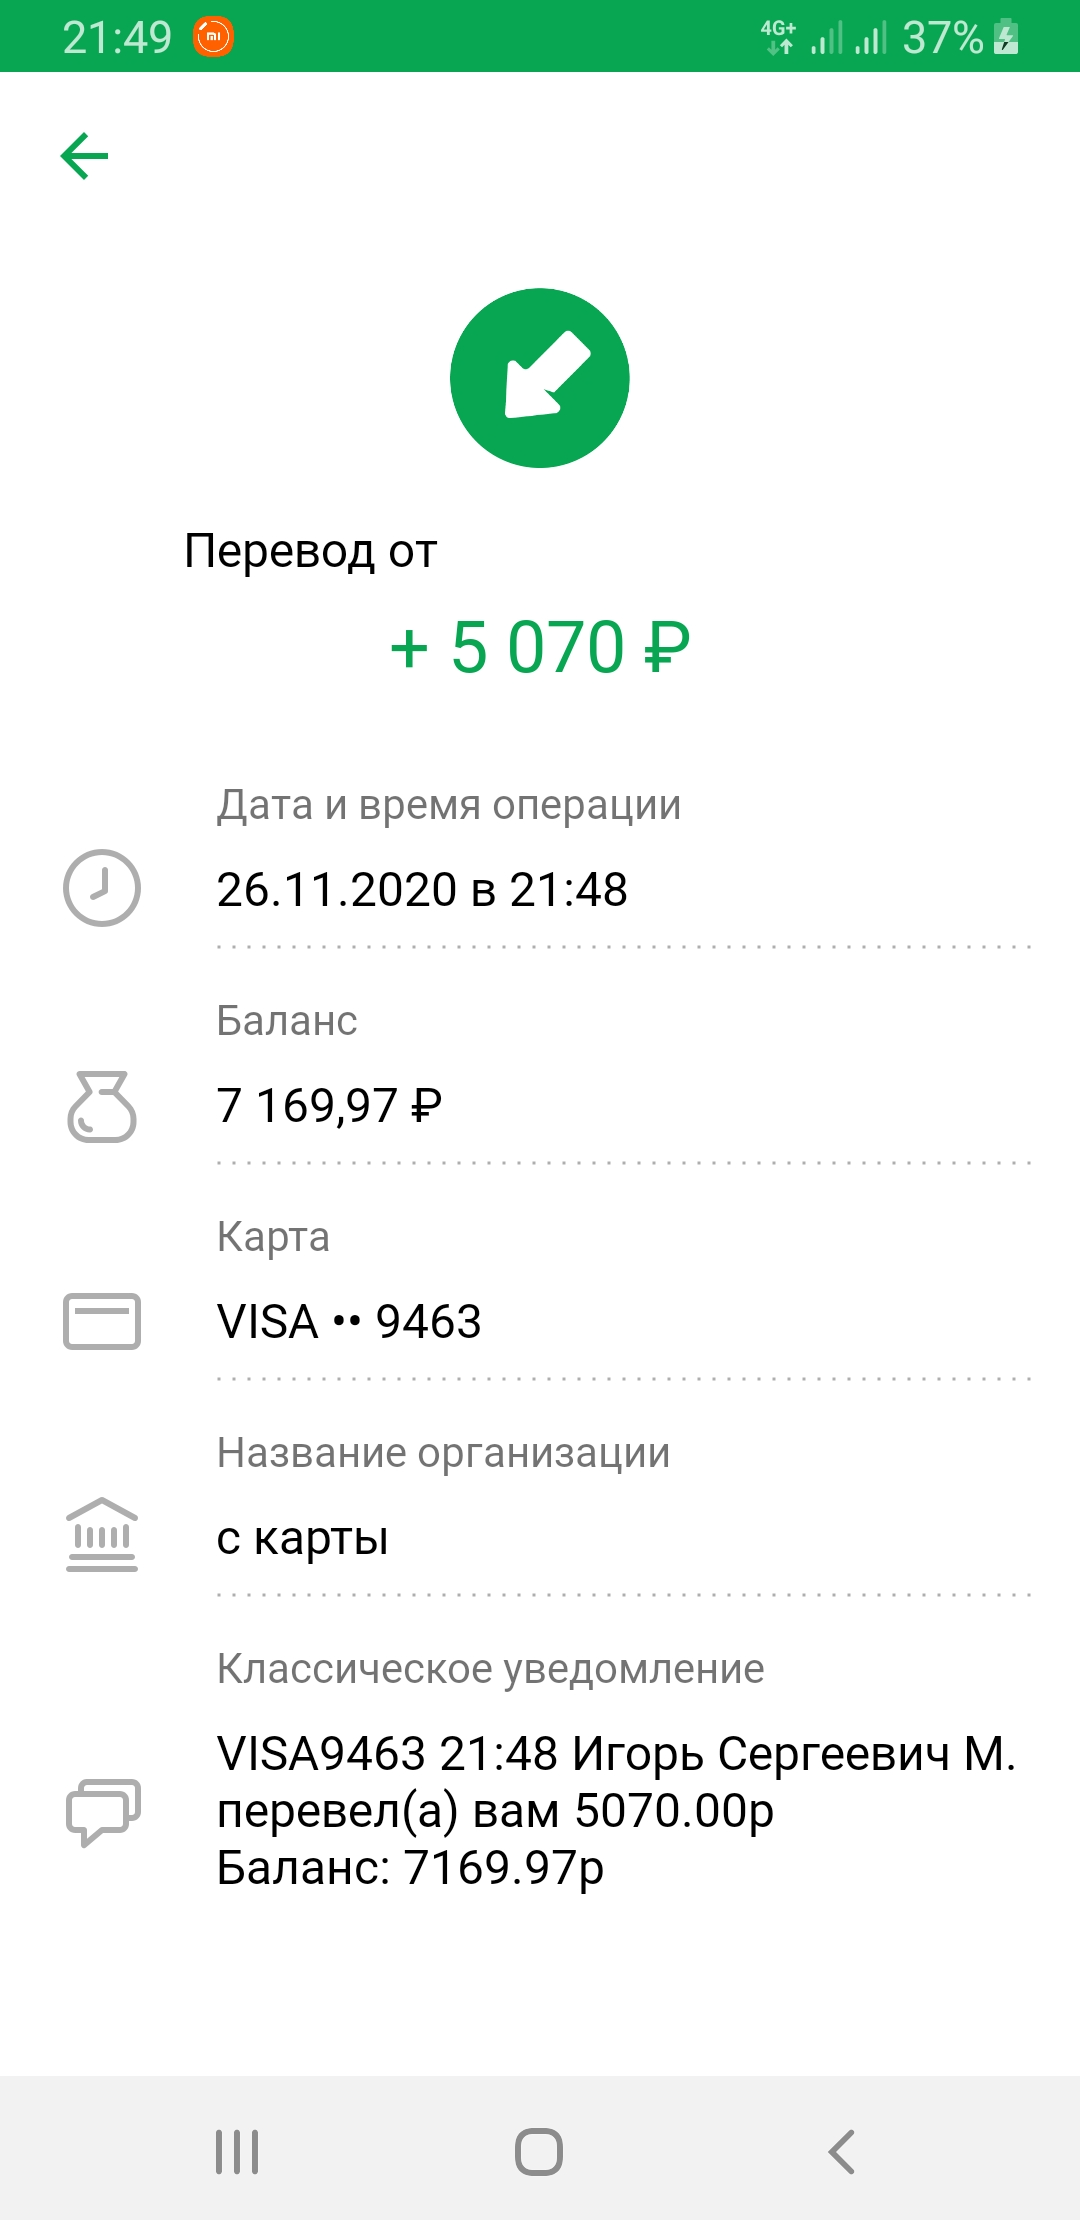 Перевели 250 рублей